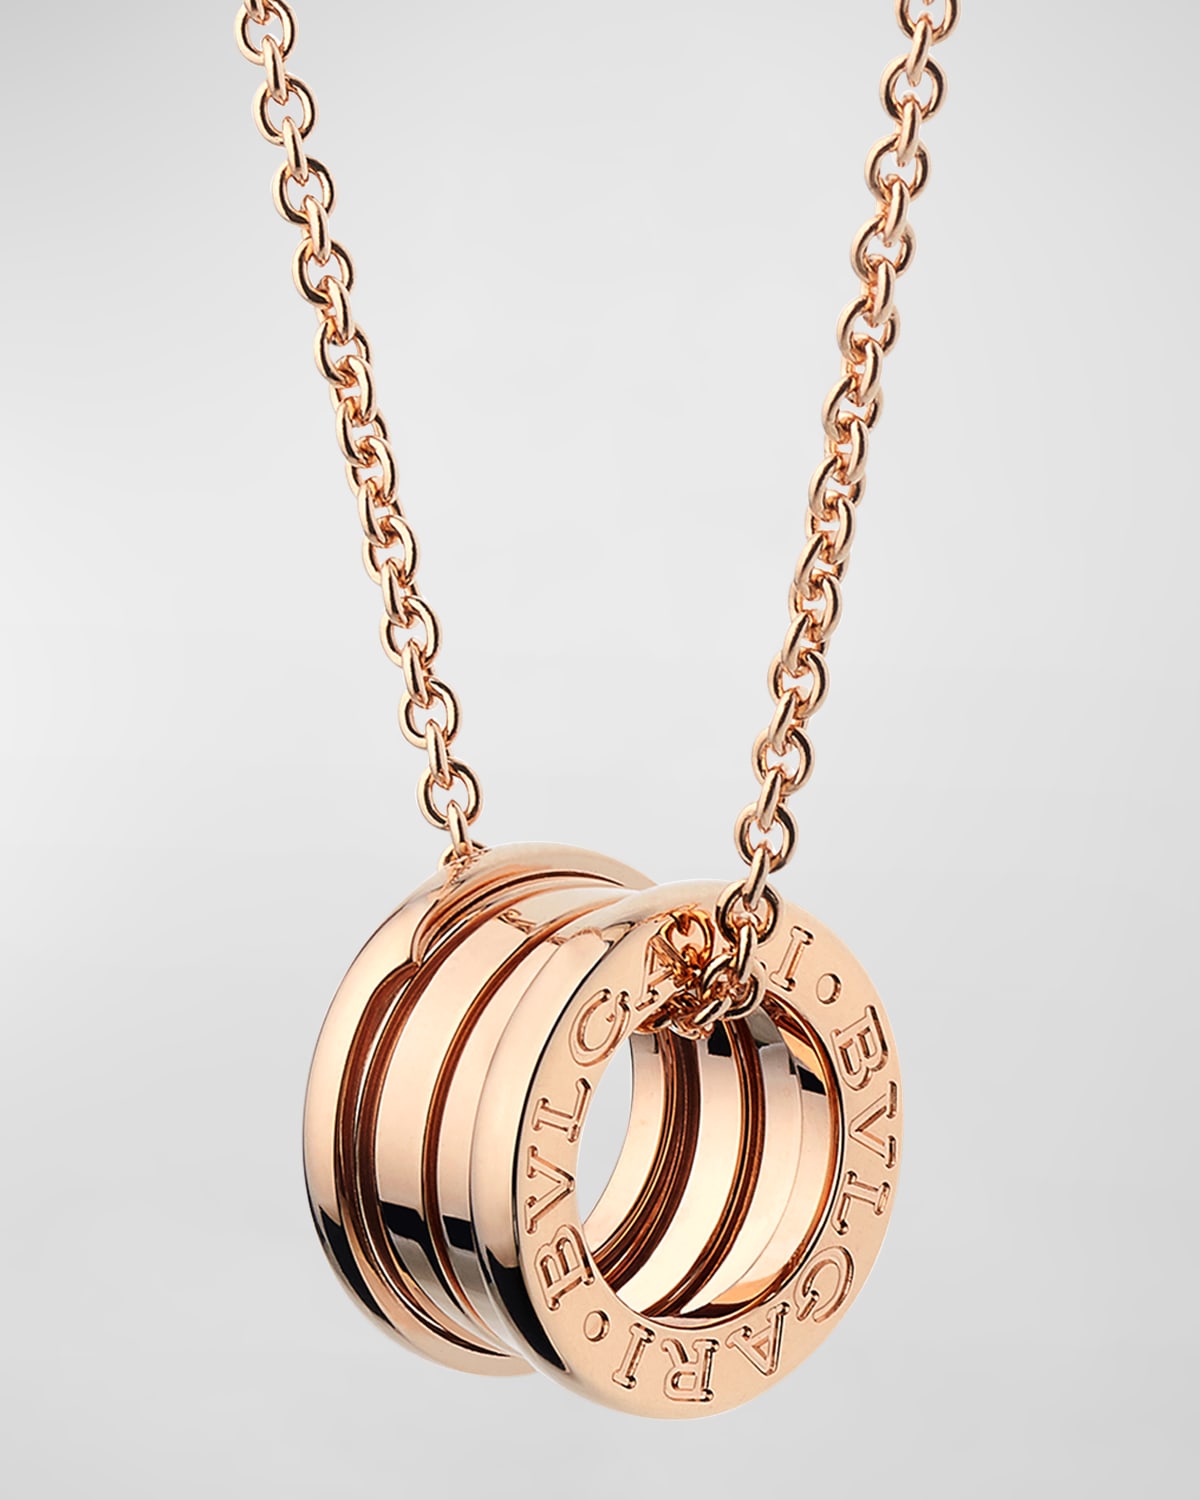 BVLGARI B.Zero1 Pendant Necklace in Pink Gold and White Ceramic 